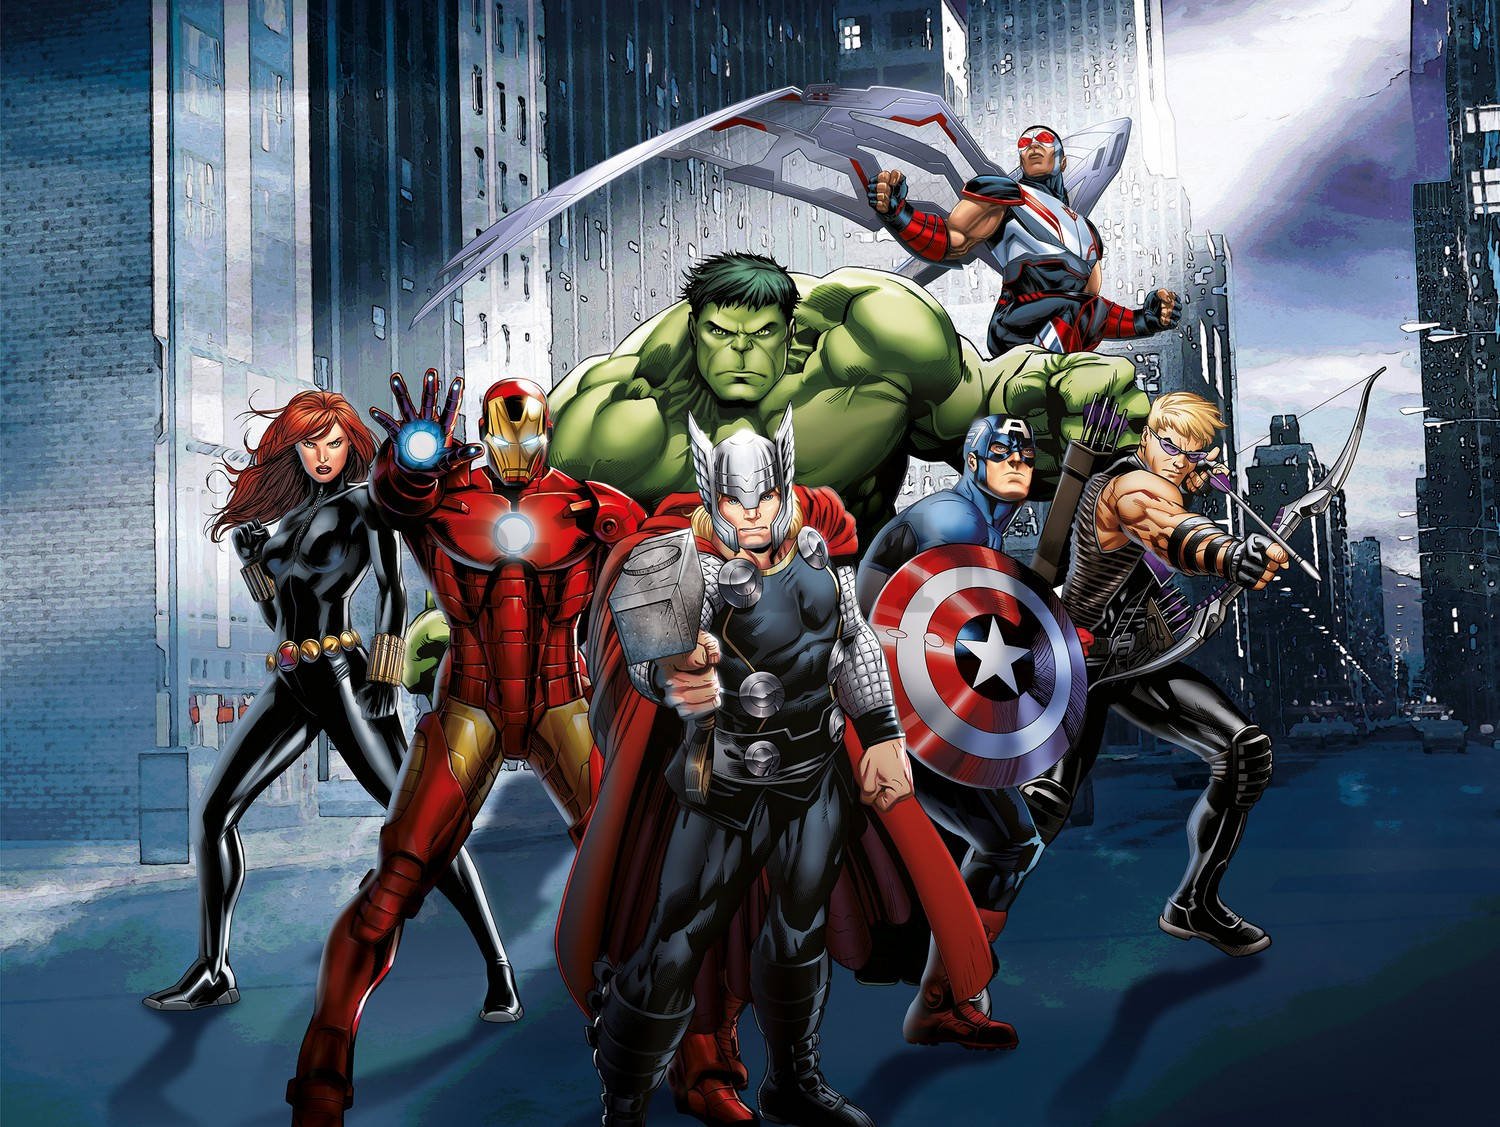 Foto tapeta Vlies: Avengers (5) - 360x270 cm